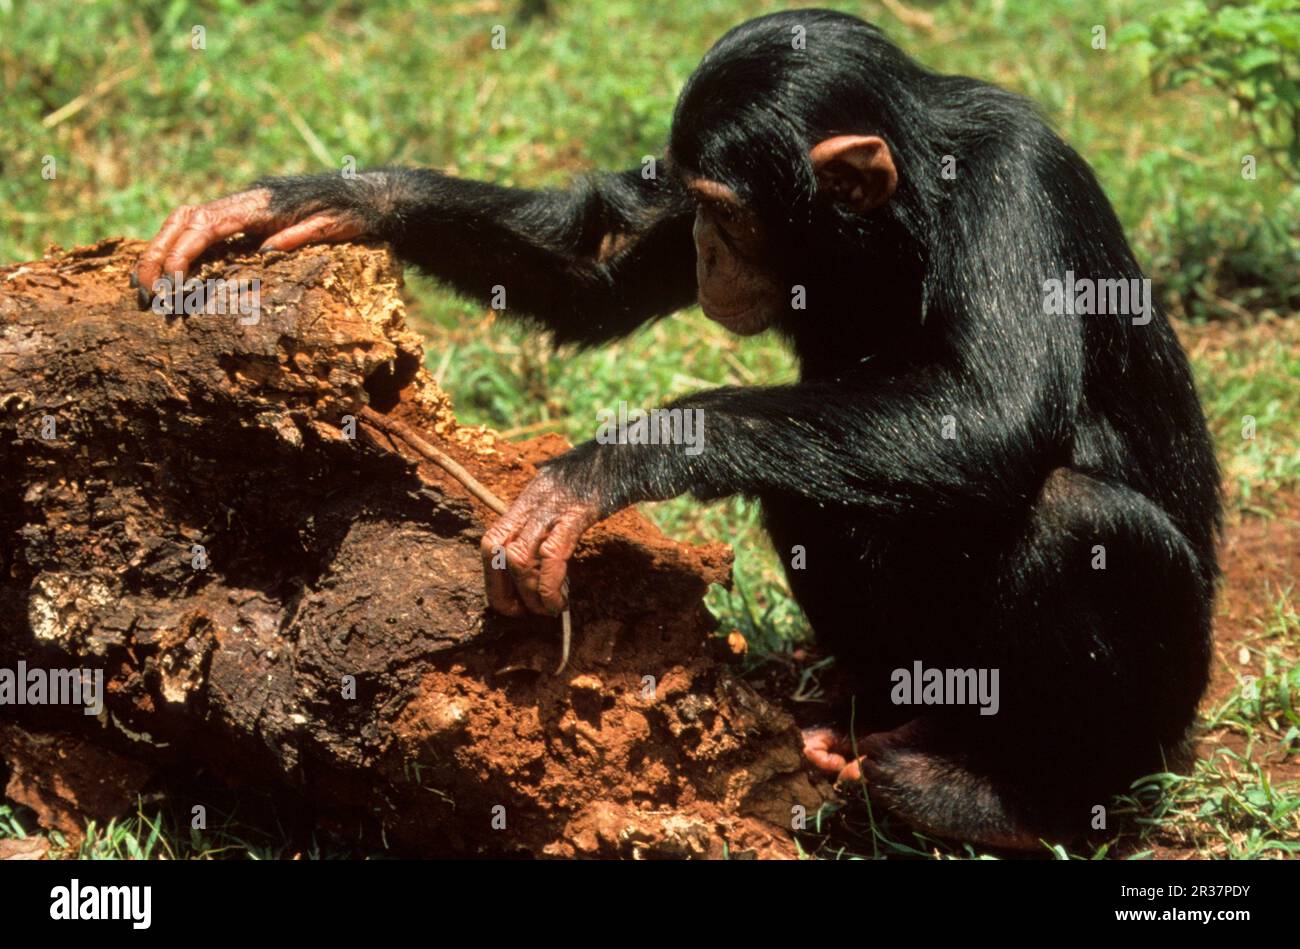 Common chimpanzee (Pan troglodytes), chimpanzees, apes, apes, primates, mammals, animals, Chimpanzee young female, digging with stick, Nairobi, Kenya Stock Photo